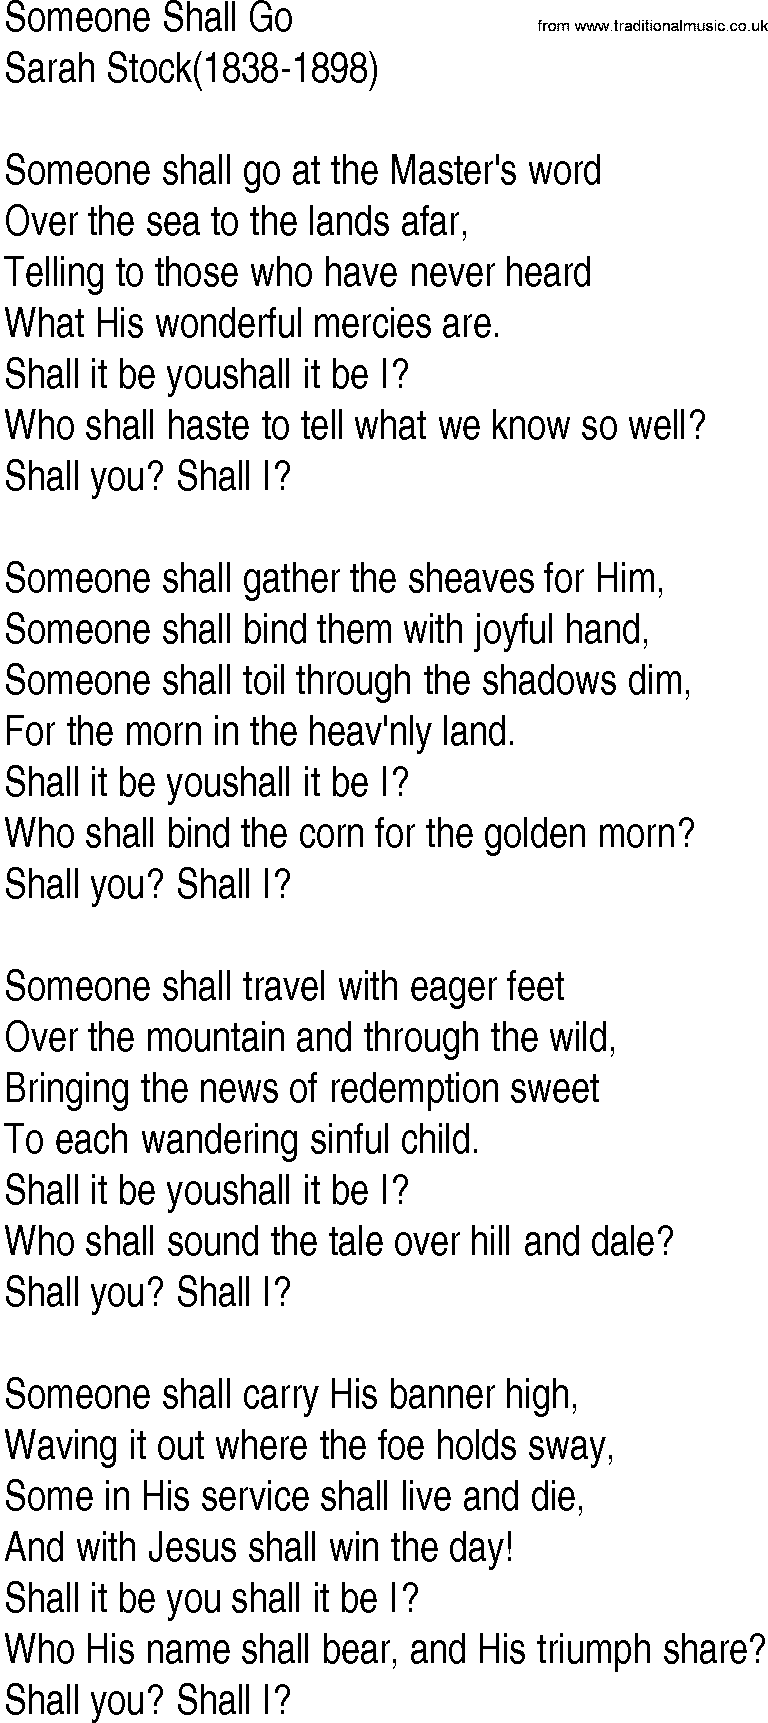 Hymn and Gospel Song: Someone Shall Go by Sarah Stock lyrics